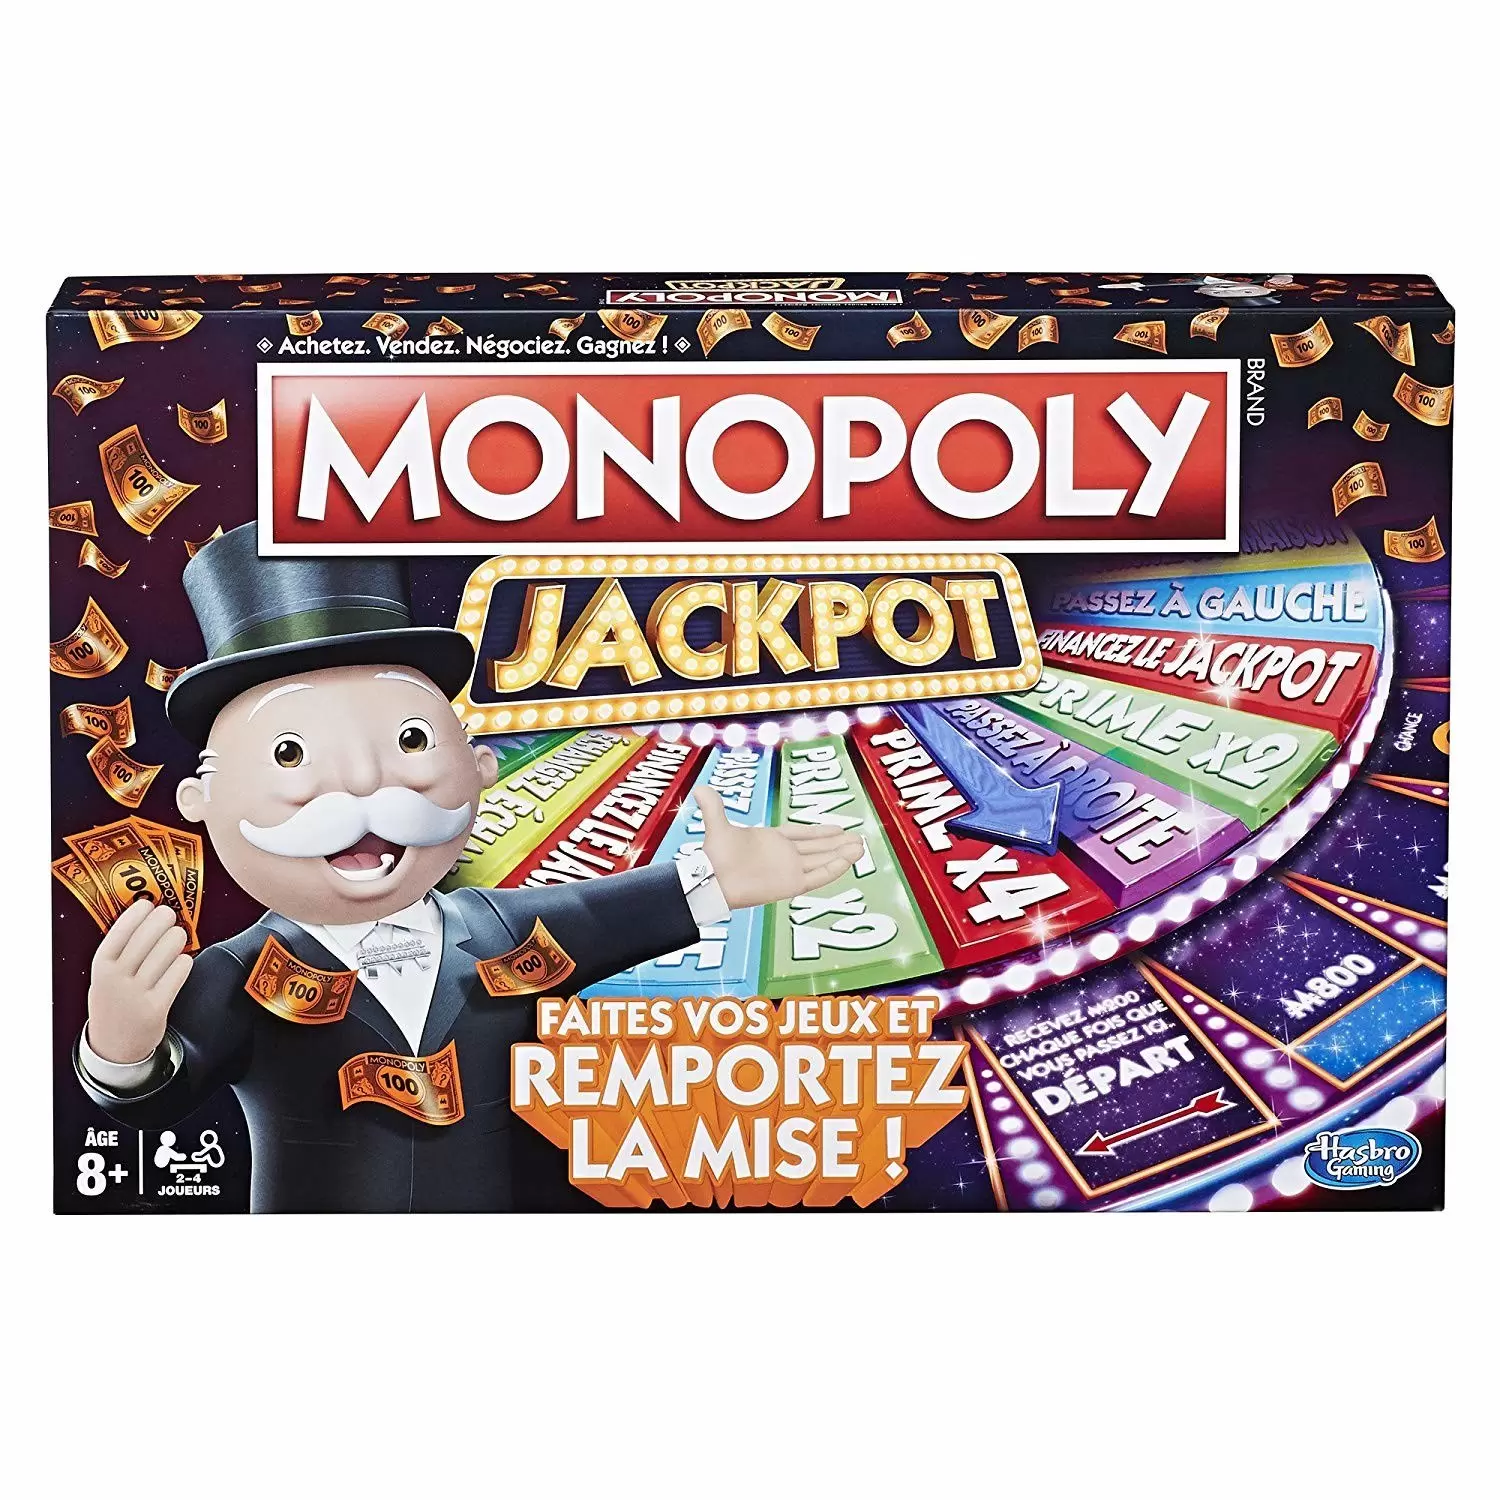 Monopoly Original - Monopoly Jackpot